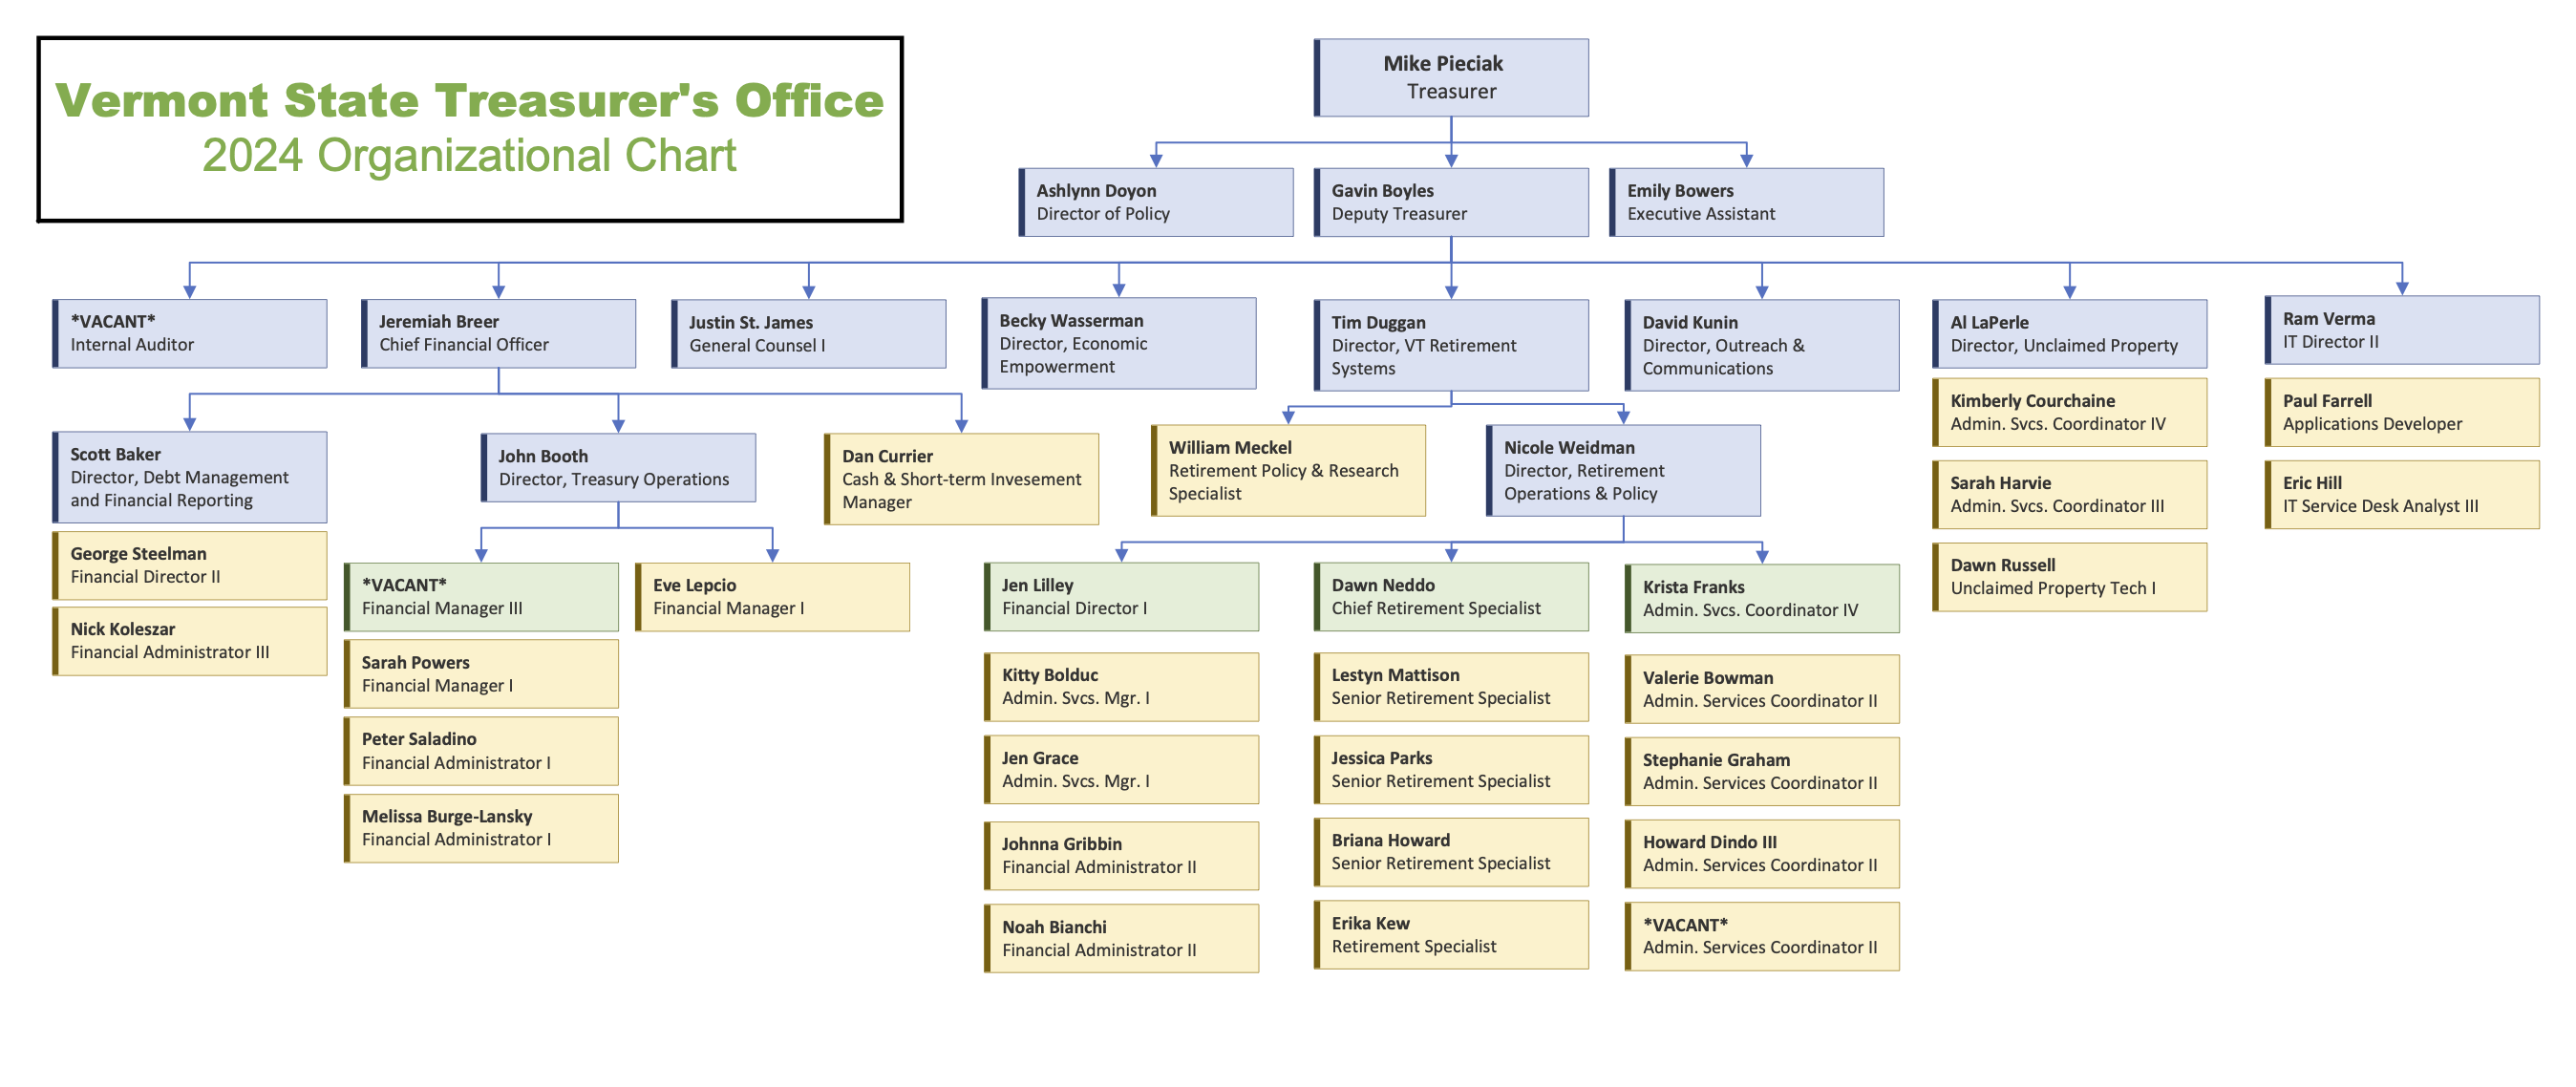 Vermont State Treasurer's Office Organizational Chart